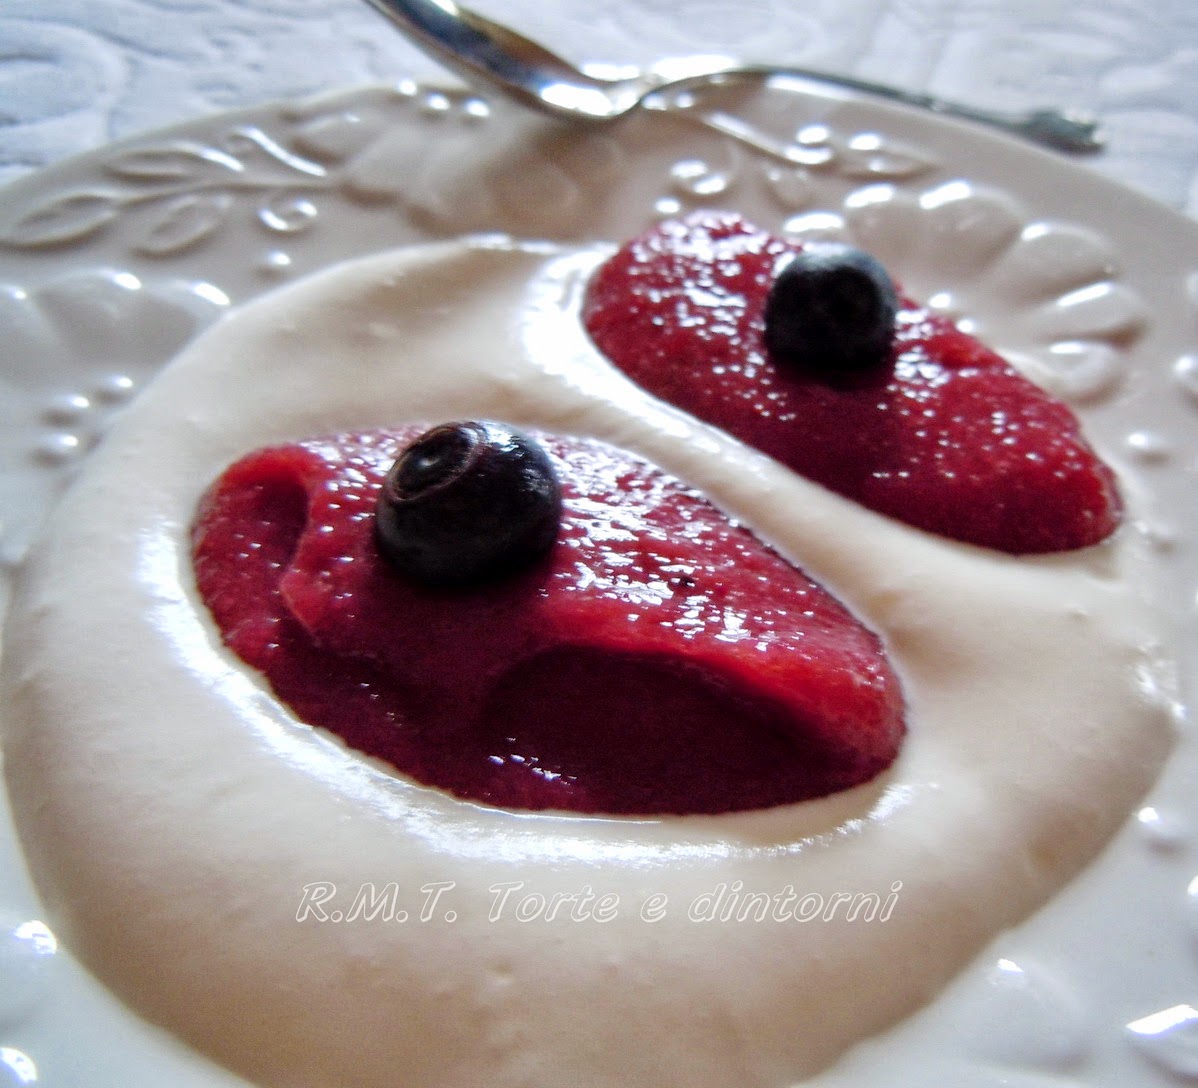 Debessmanna, dessert lettone di mirtilli e yogurt